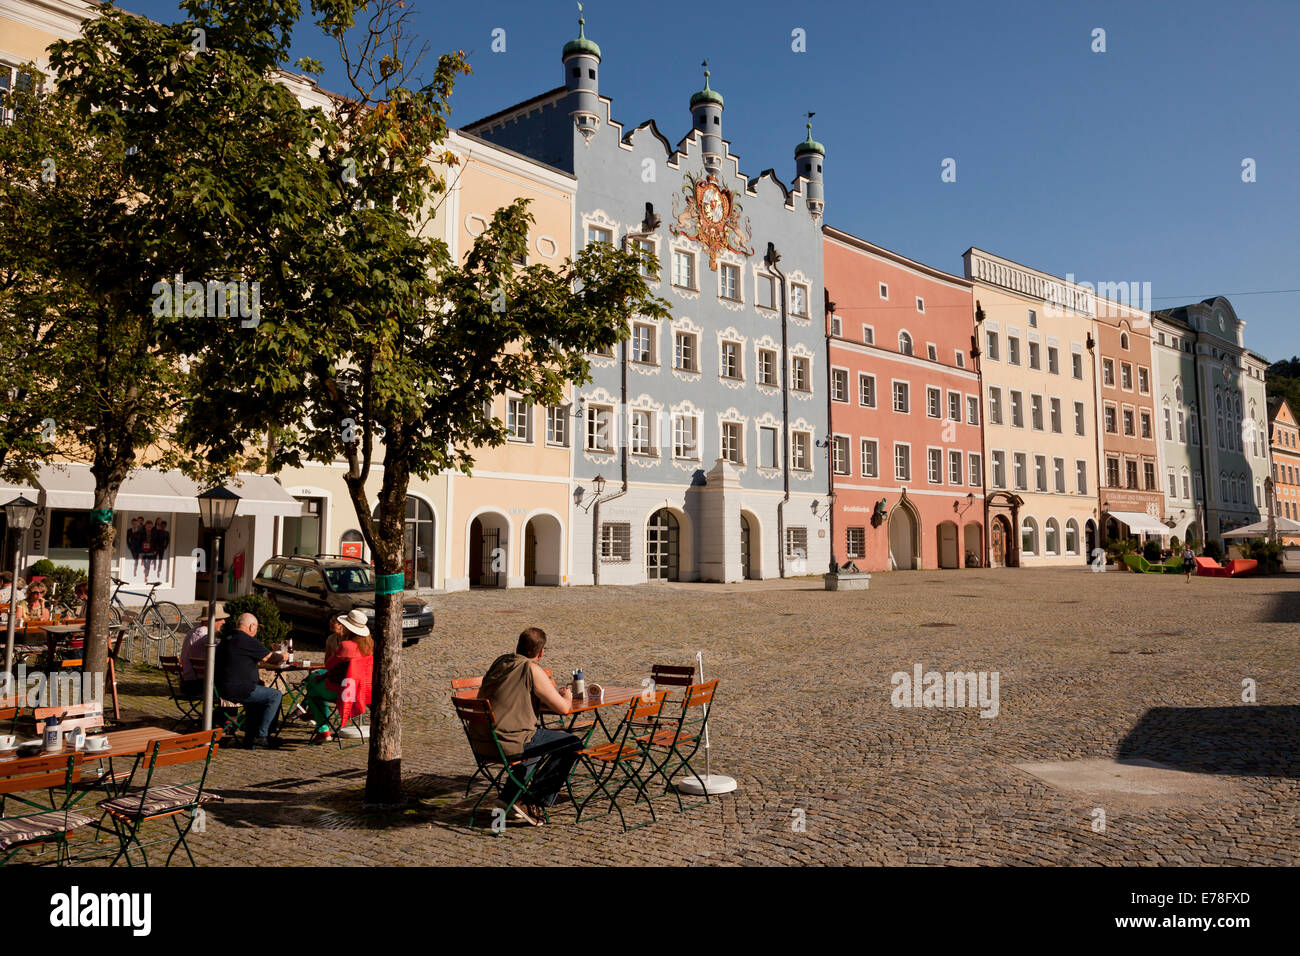 Plaza central Stadtplatz y antiguo edificio gubernamental en Burghausen, Baviera, Alemania, Europa Foto de stock